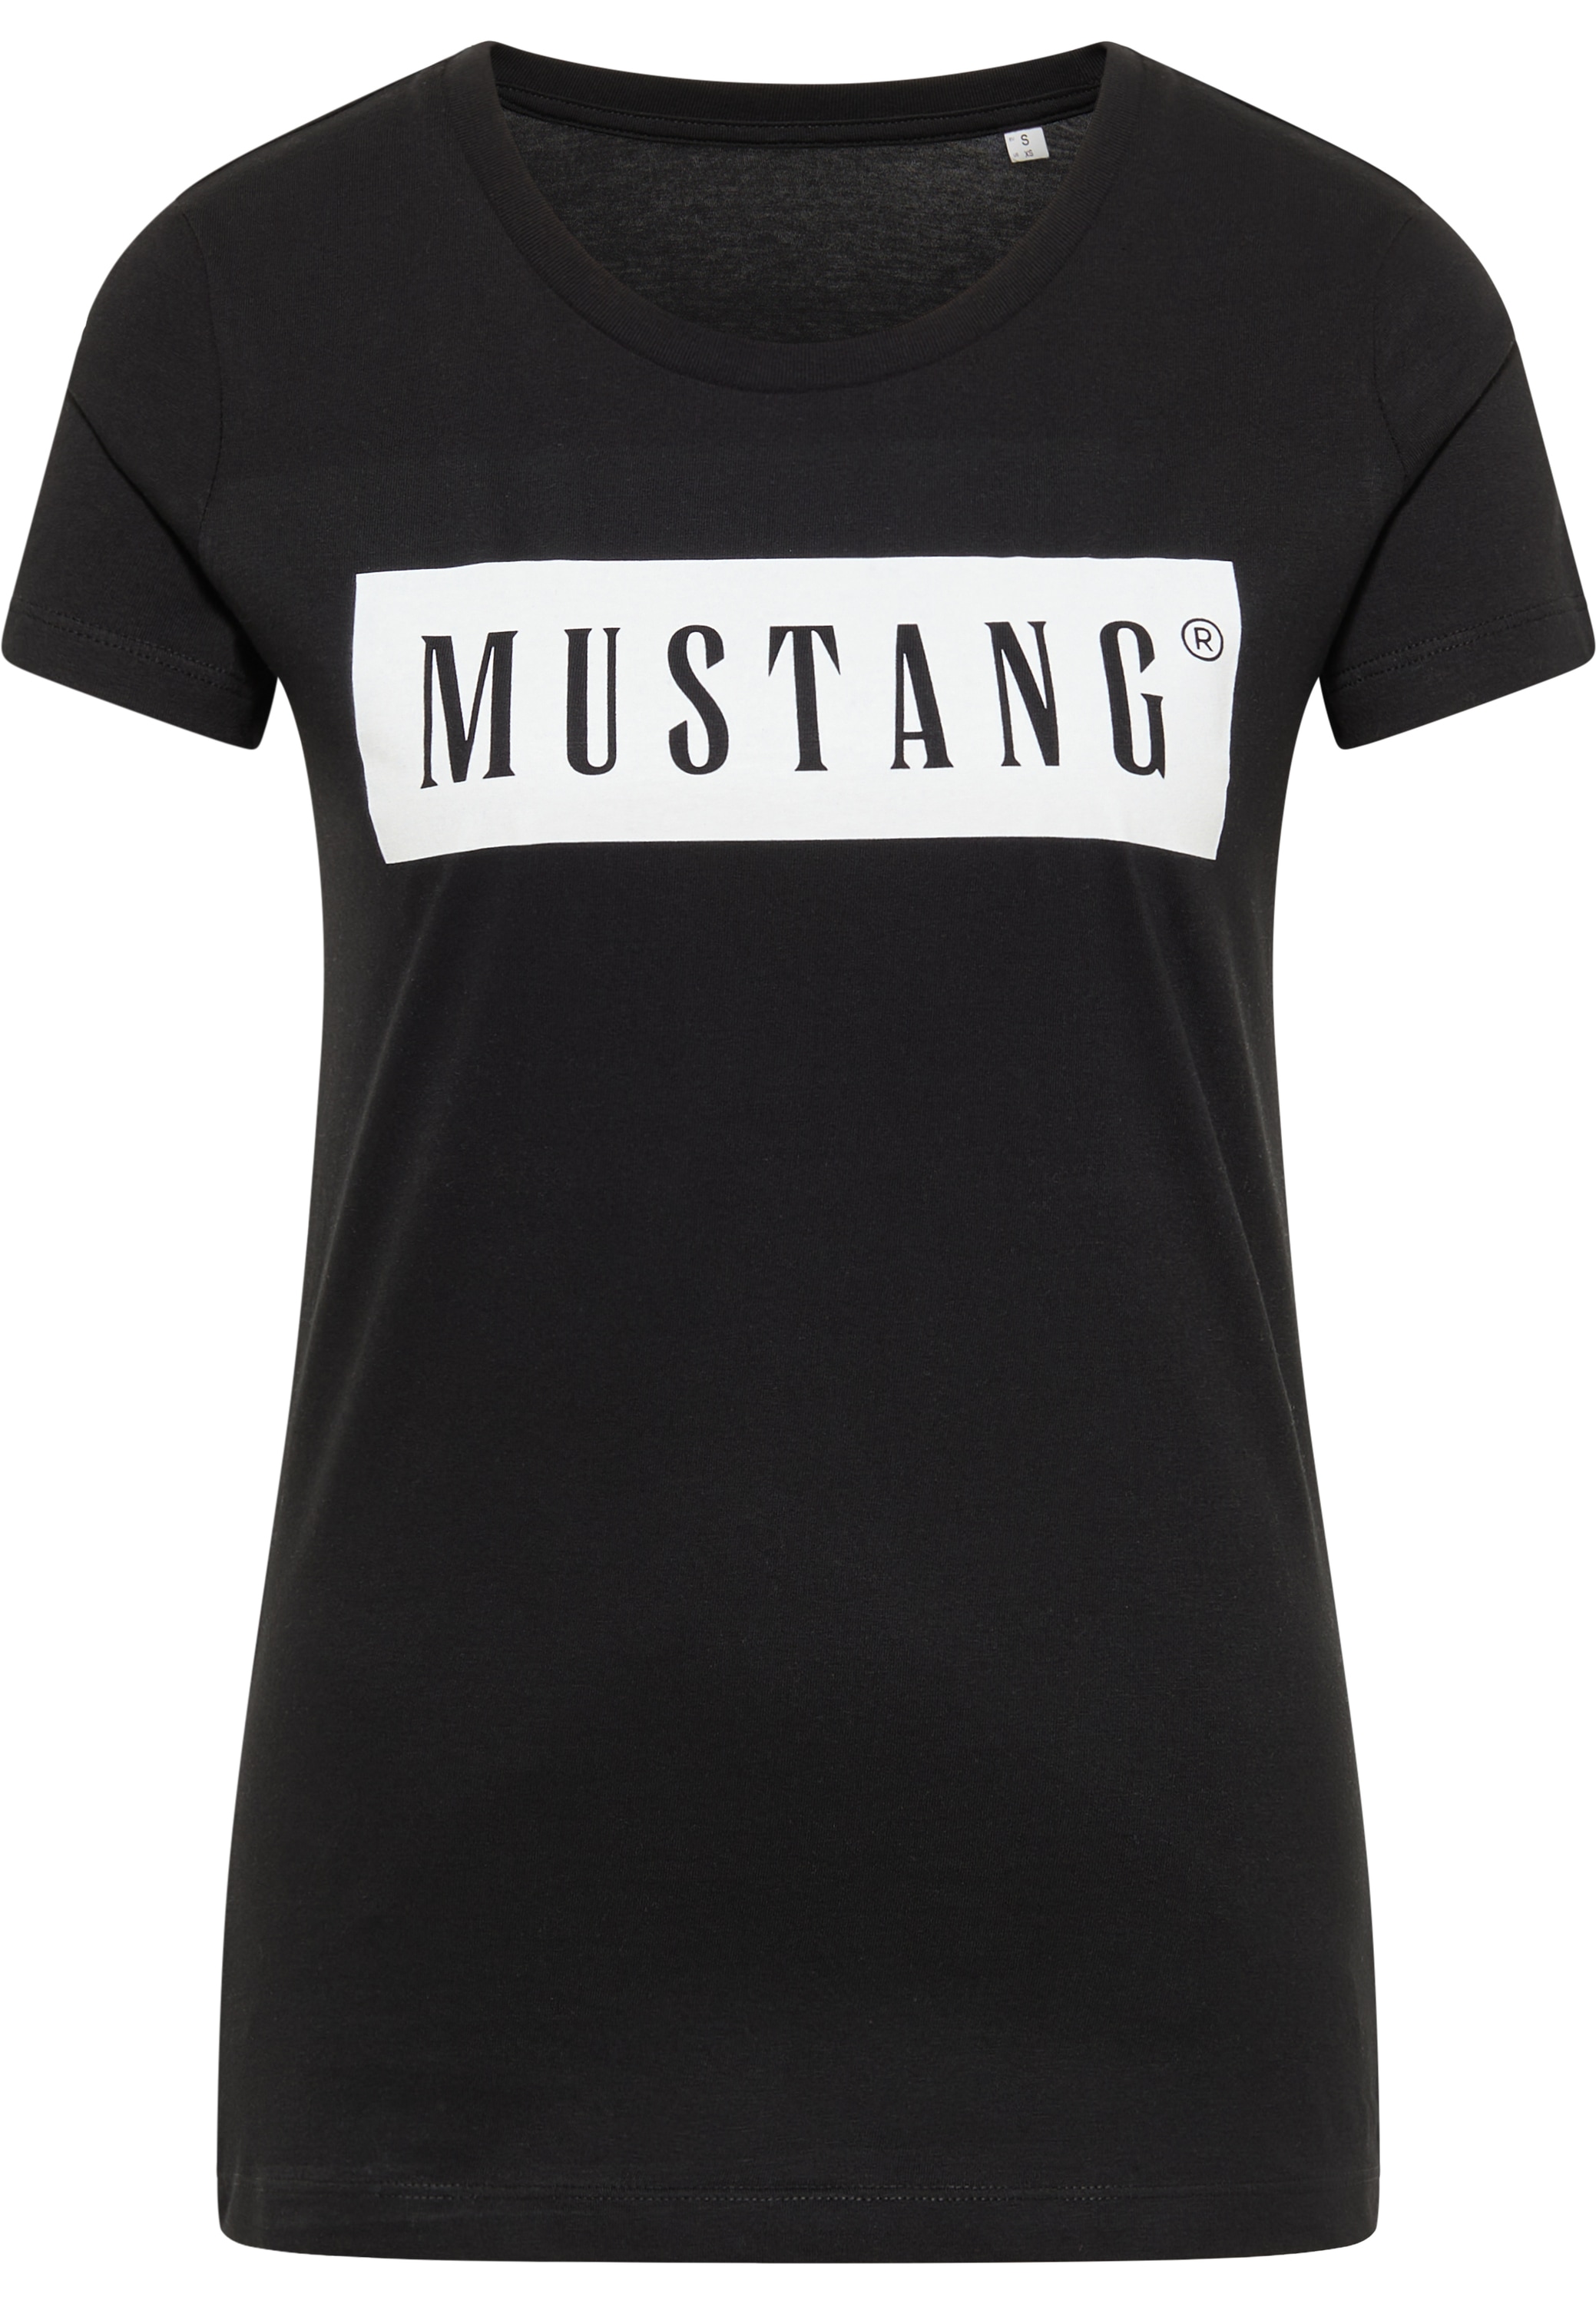 ♕ Print-Shirt« MUSTANG »Mustang T-Shirt T-Shirt bei